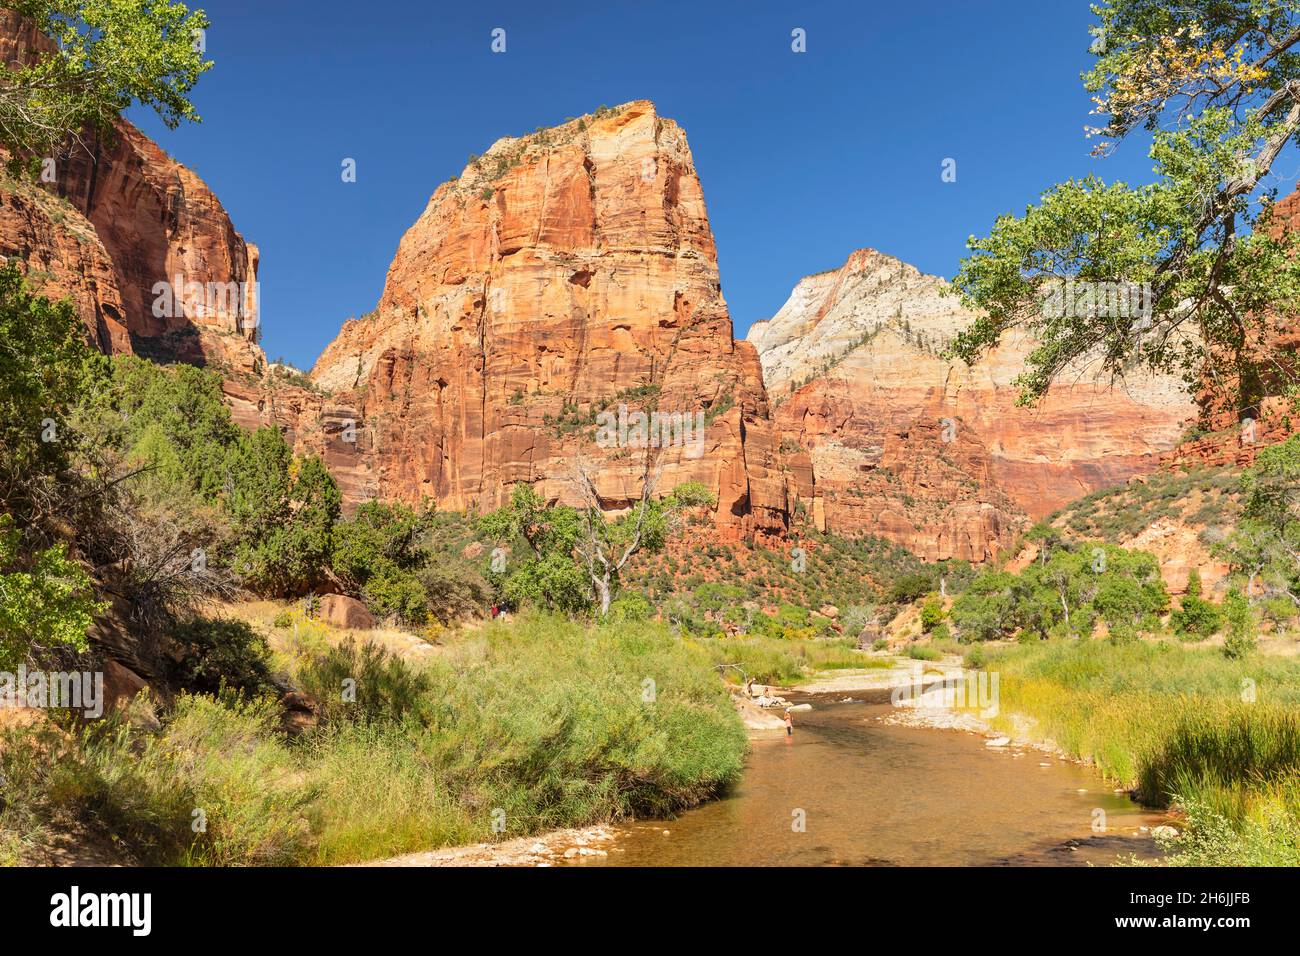 Virgin River und Angel's Landing, Zion National Park, Colorado Plateau, Utah, United States of America, North America Stock Photo